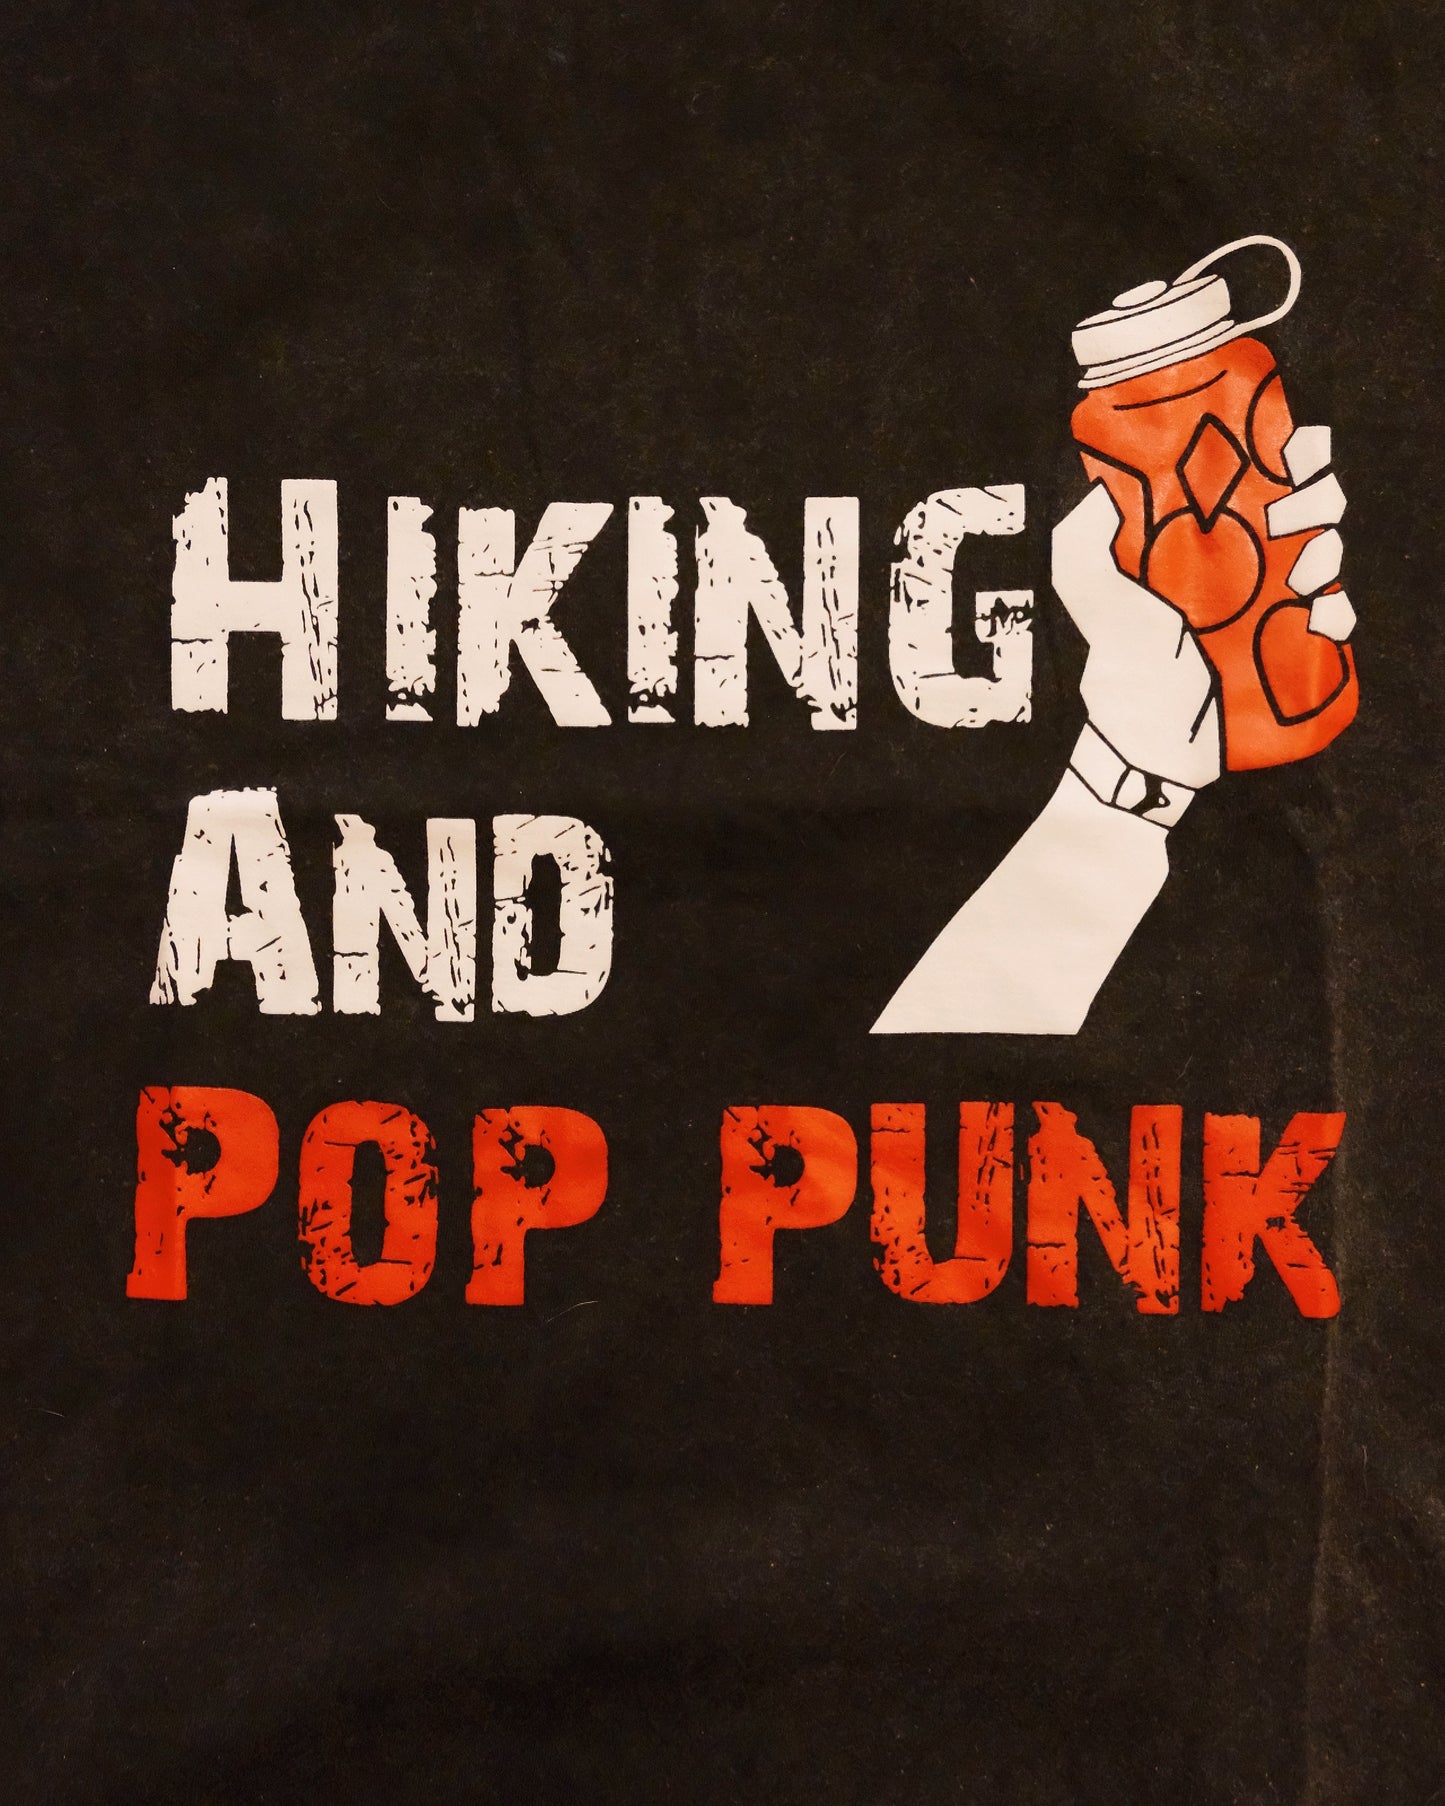 Hiking & Pop Punk Tee